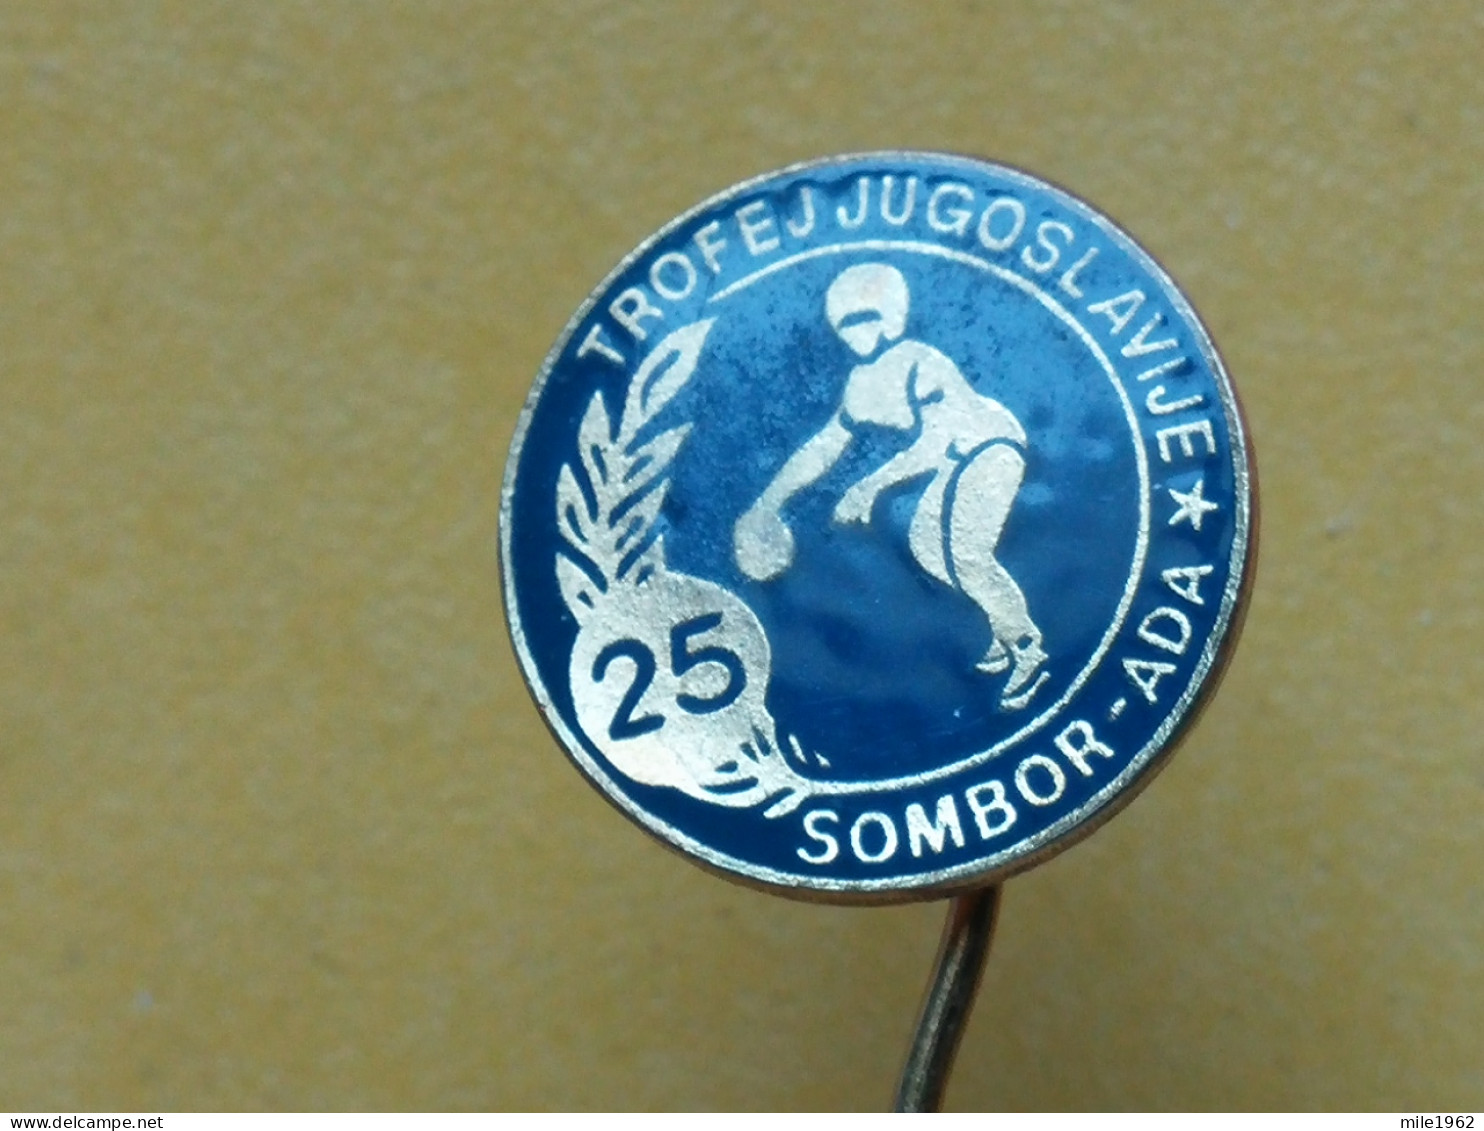 Badge Z-53-1 - BASKETBALL Trofej Jugoslavije, SOMBOR, ADA, SERBIA - Basketball